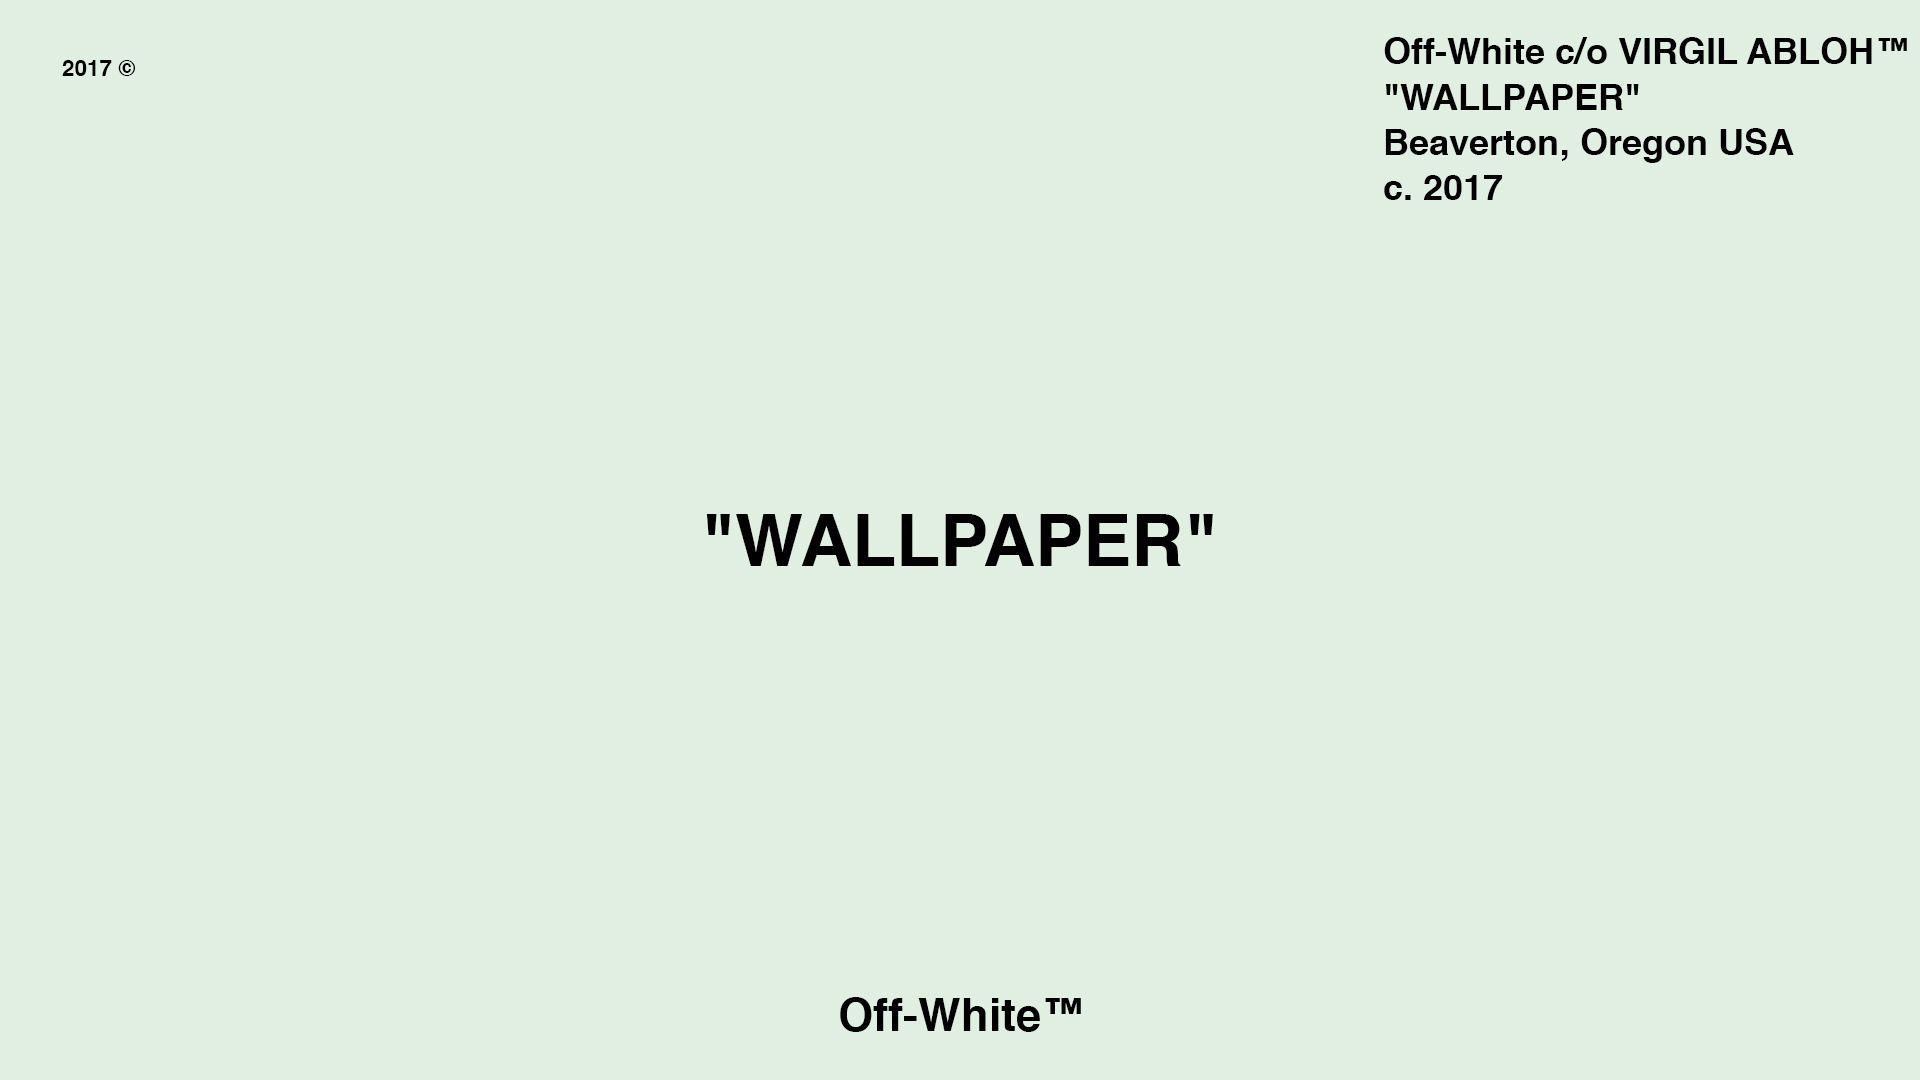 Steam Workshop::Off-White Wallpaper - Virgil Abloh